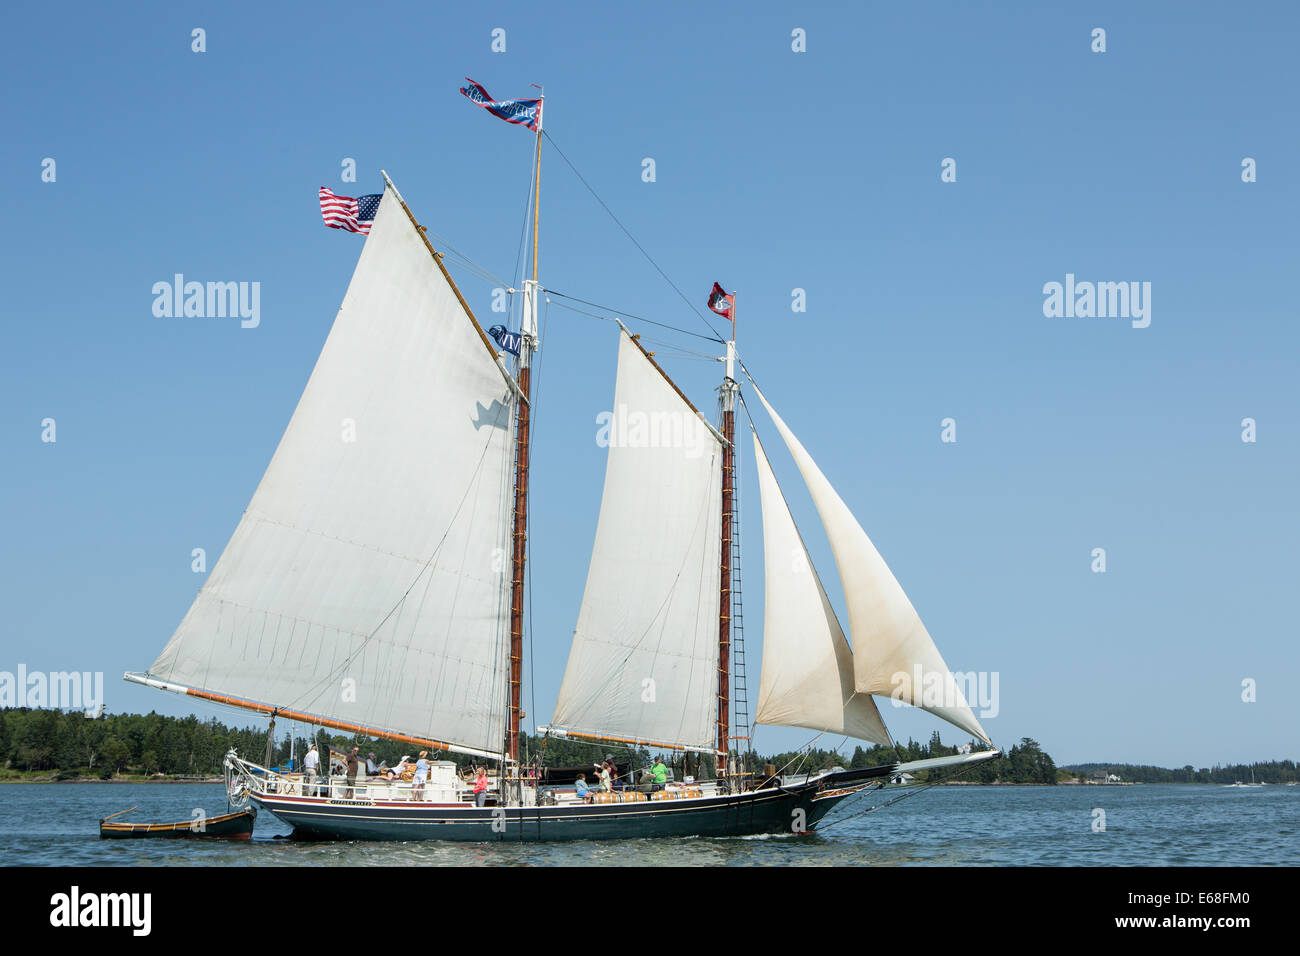 Fox Island Thorofare, ME - 11 August 2014. The windjammer schooner ...